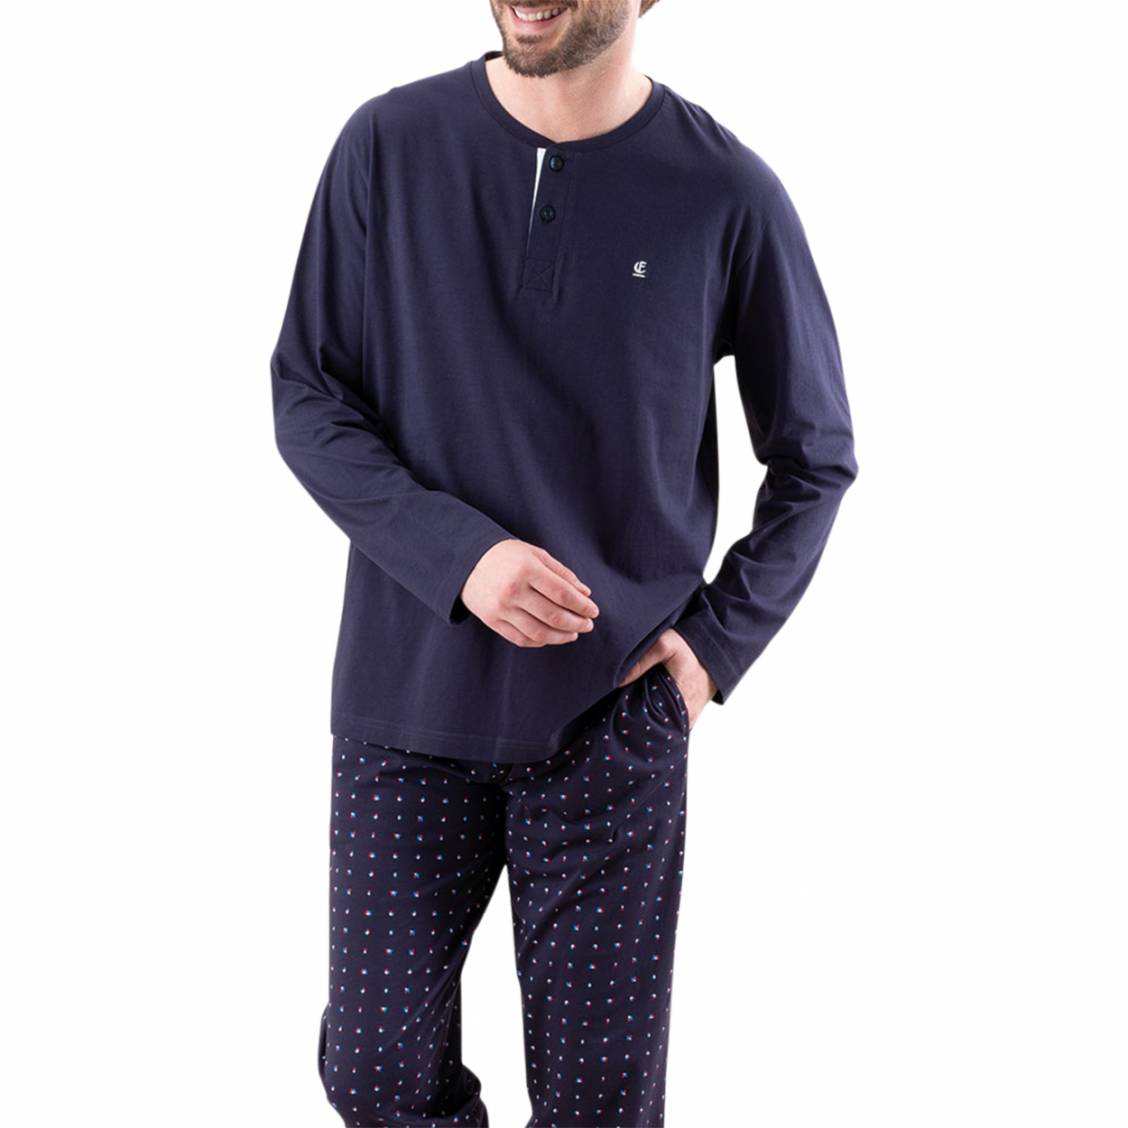 Pyjama long homme coton Eminence